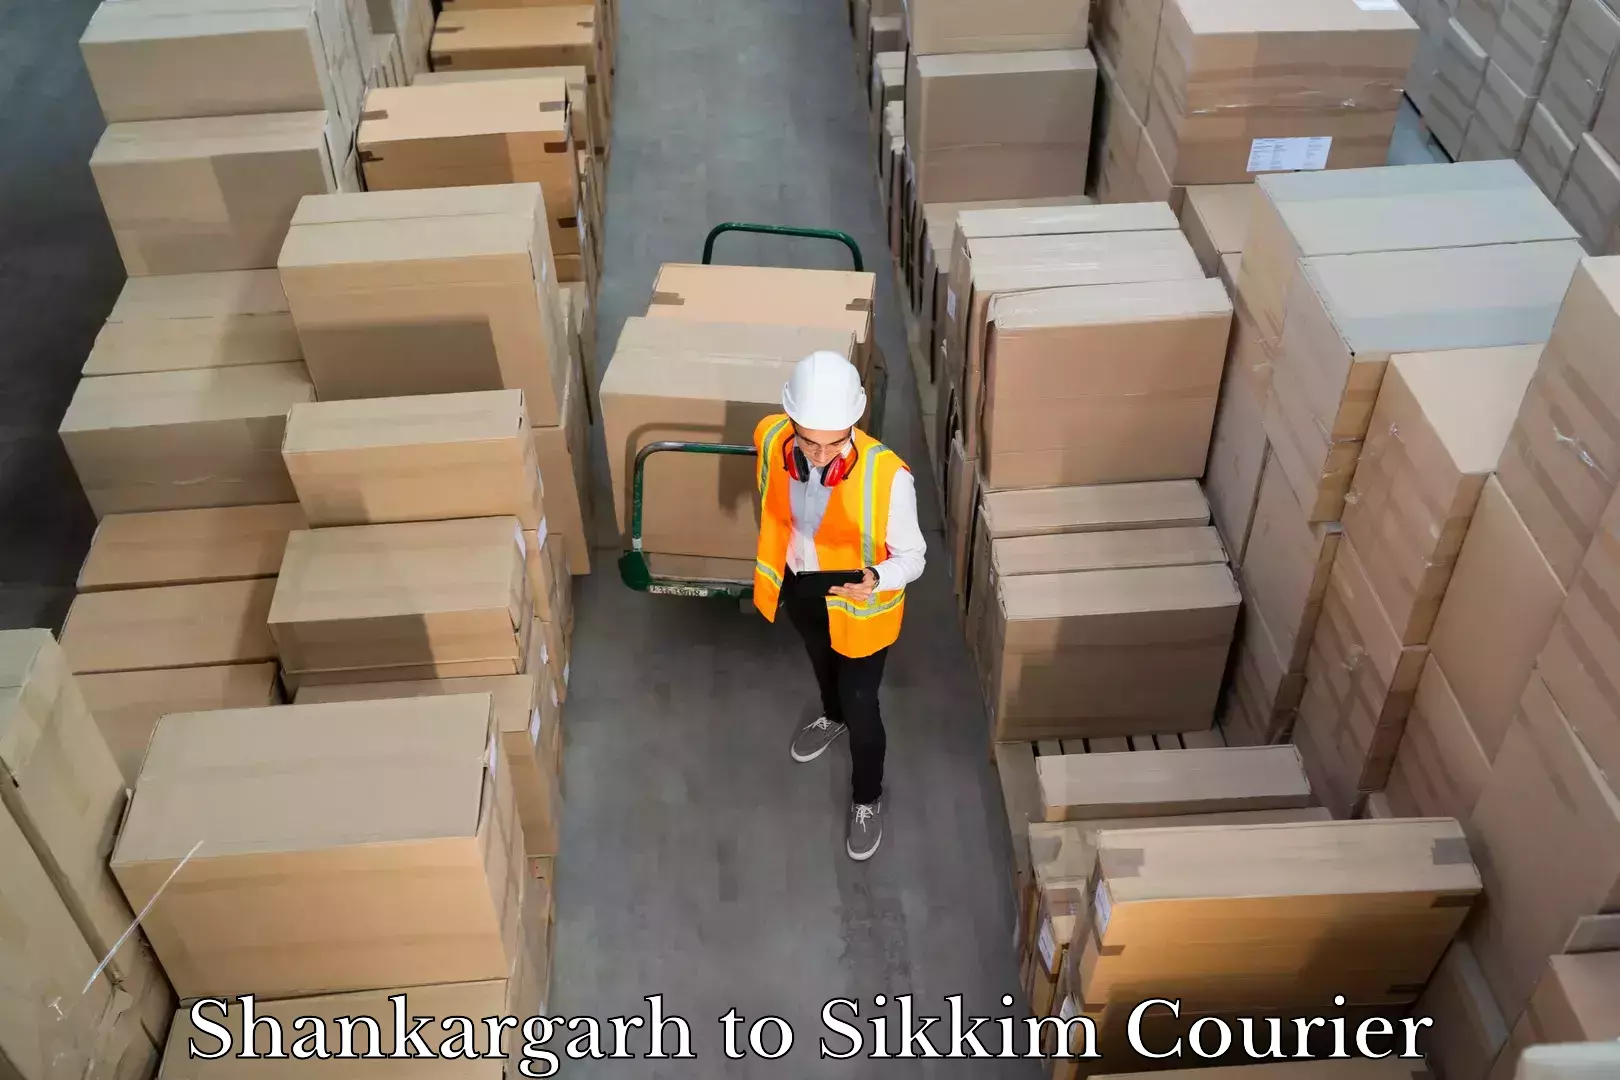 Luggage transport company Shankargarh to East Sikkim